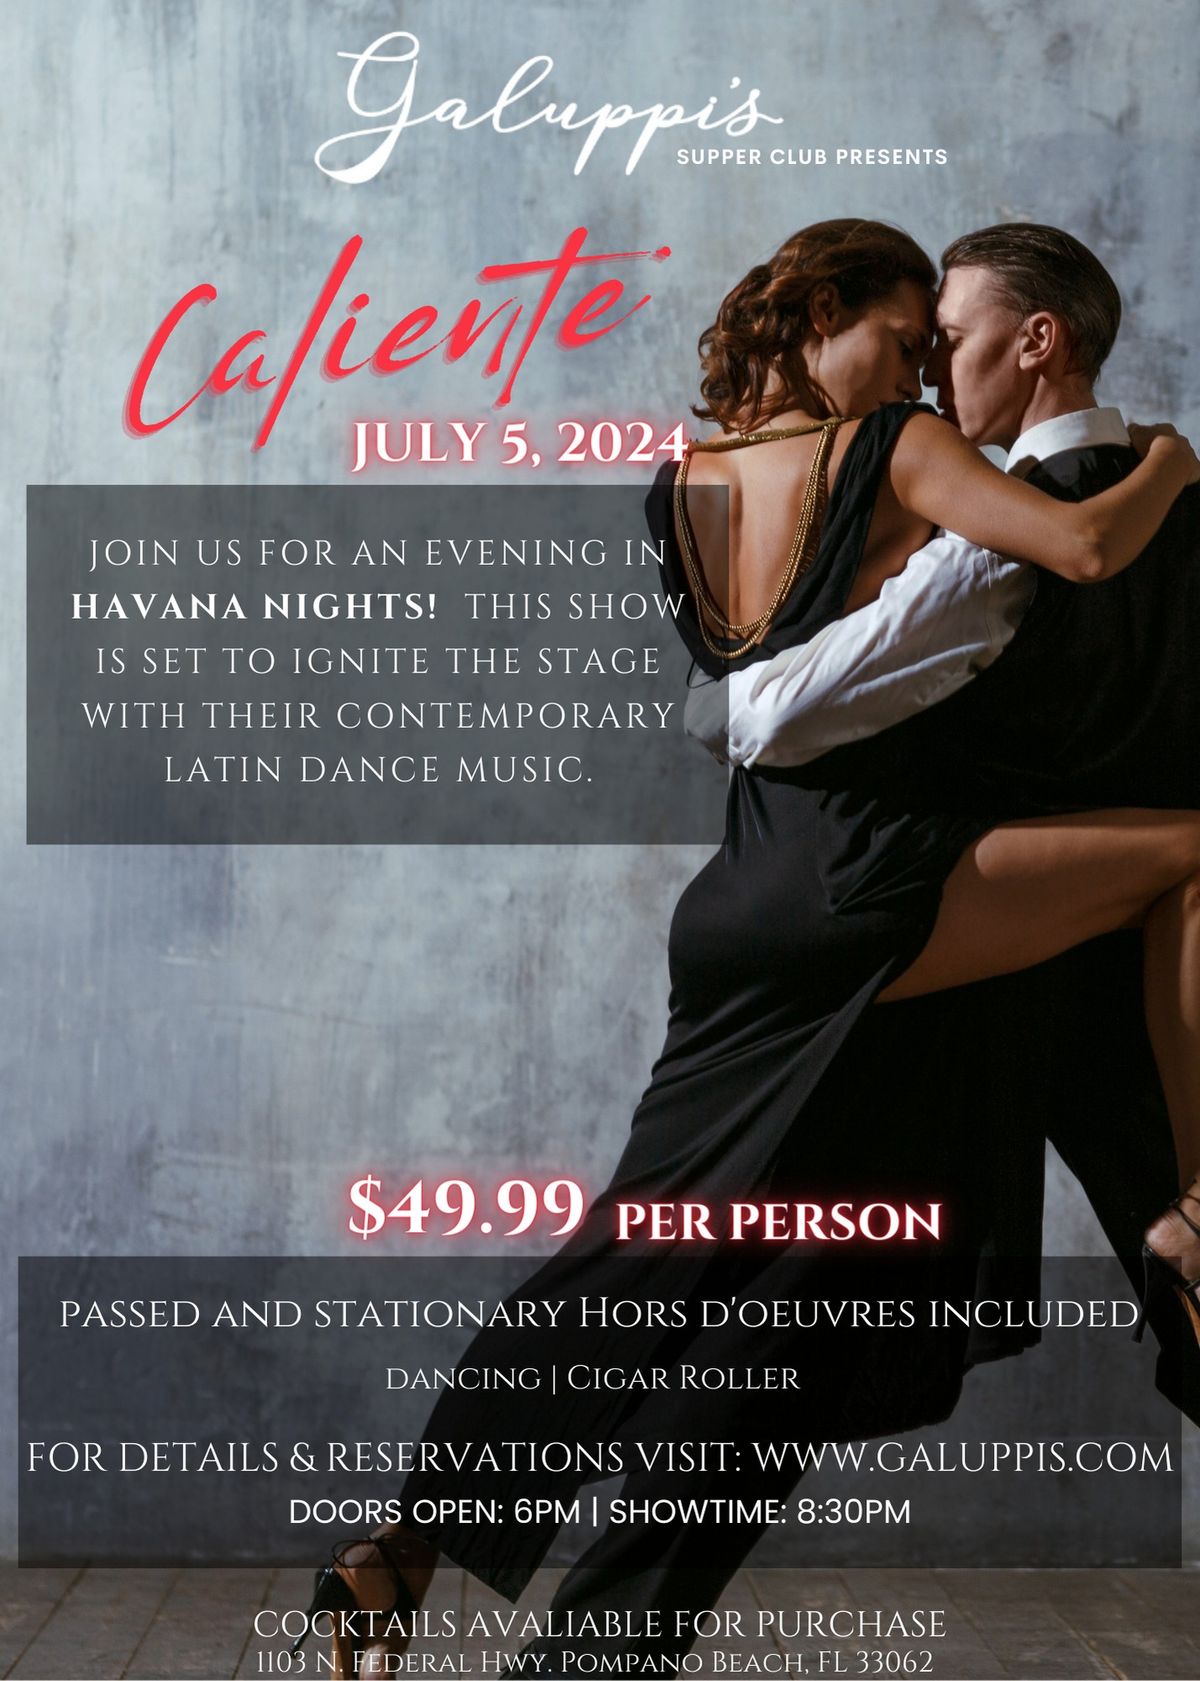 Caliente Havana Nights @ Galuppi's Friday July 5